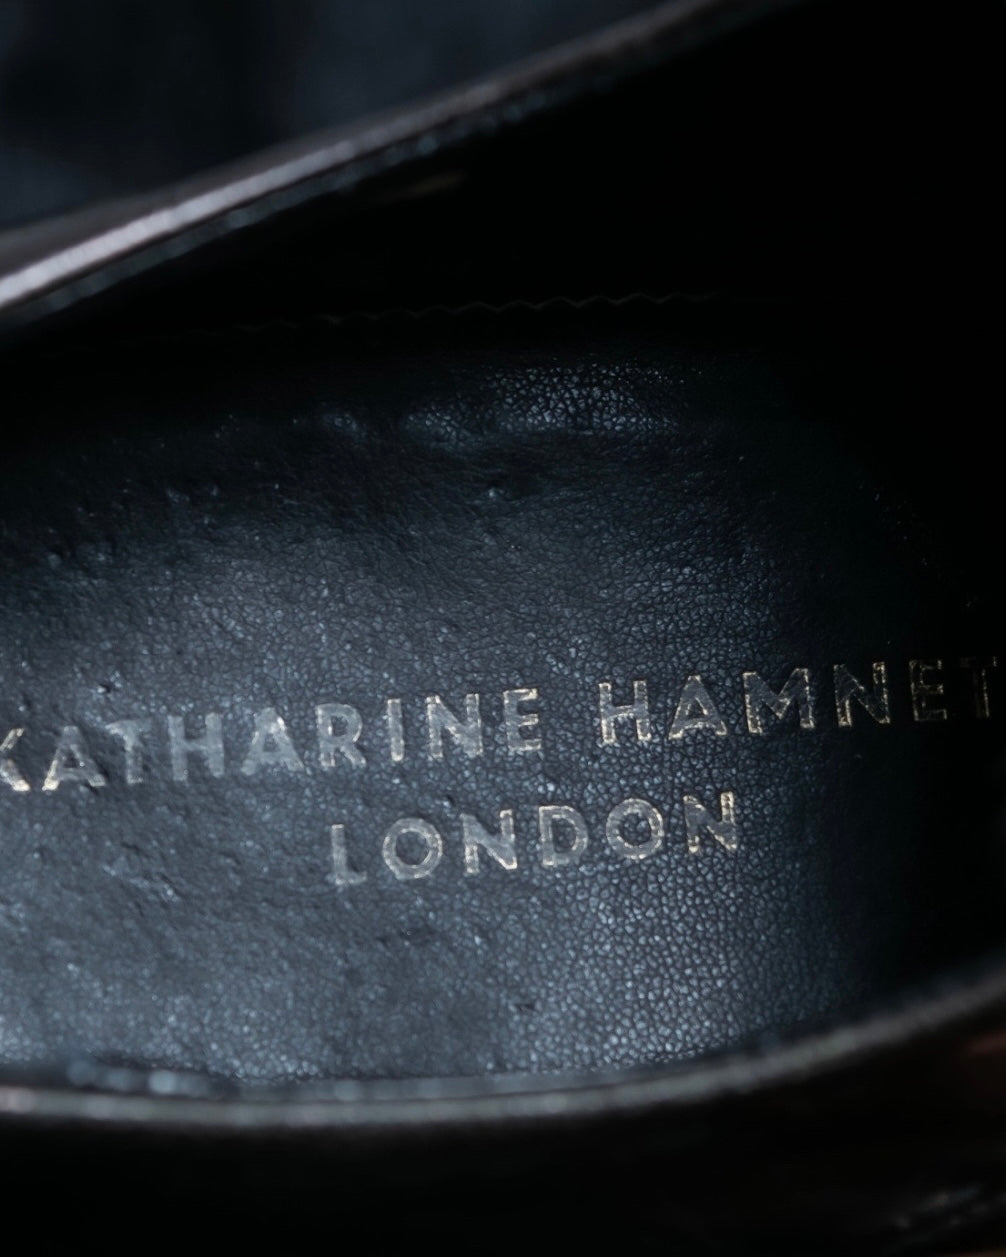 KATHARINE HAMNETT LONDON leather shoes